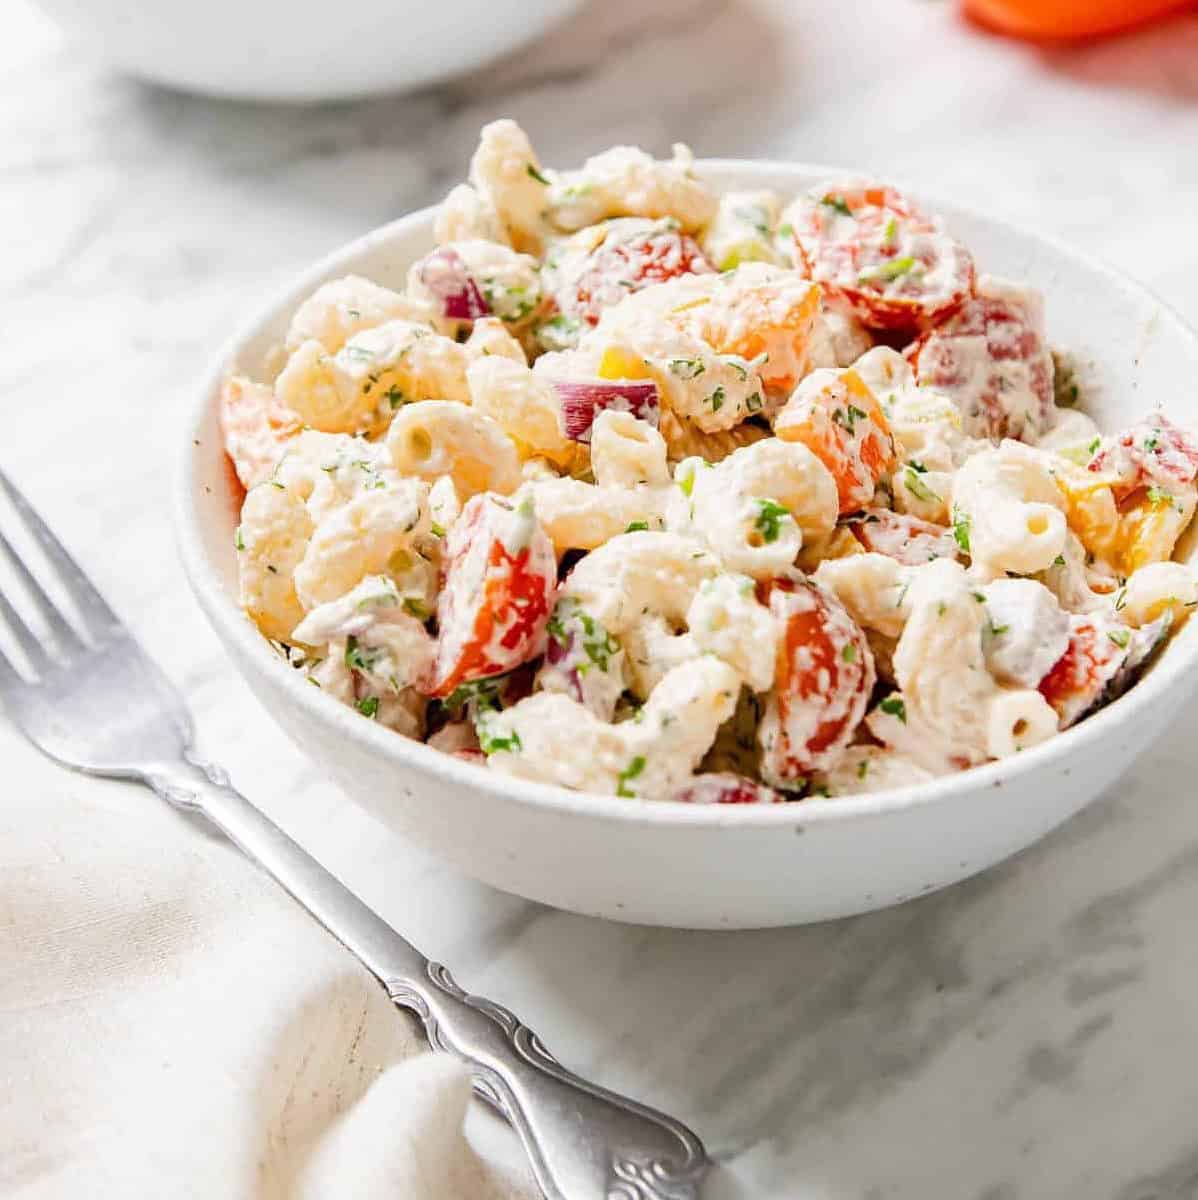  A refreshing, colorful bowl of vegan picnic pasta salad!